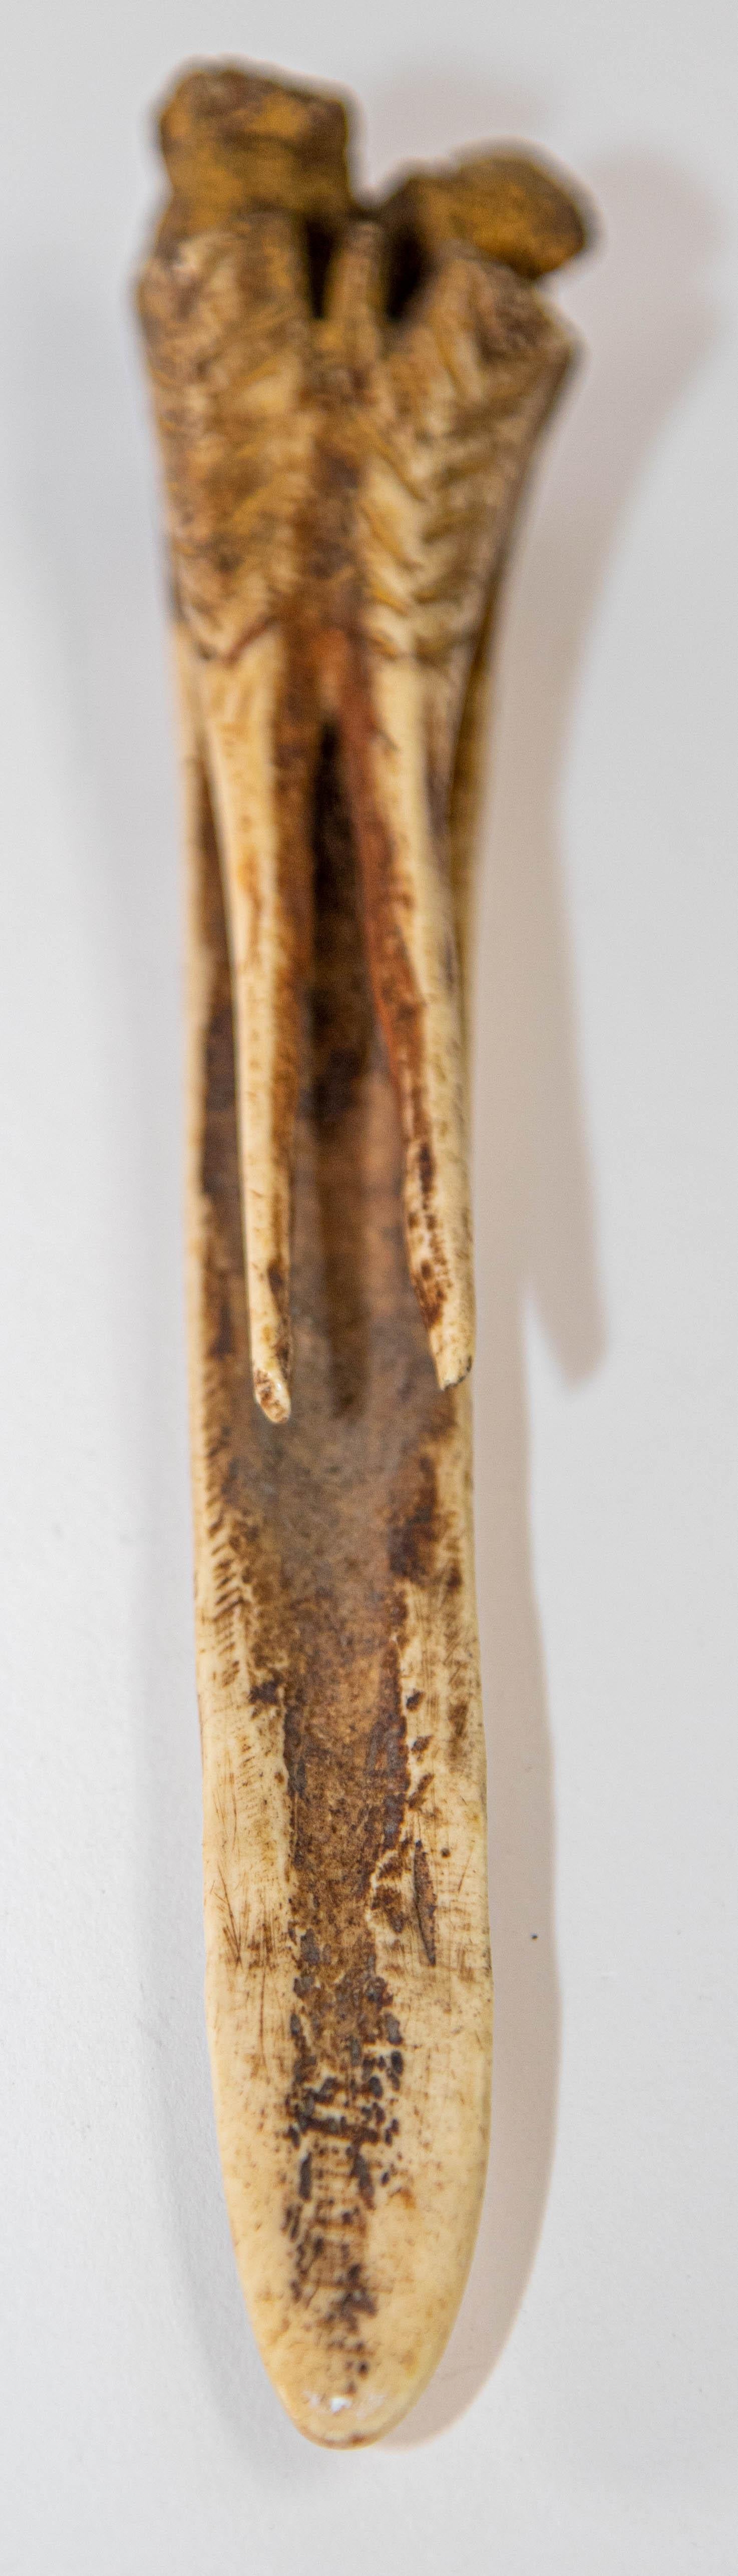 Antique Ethnic Artifact Sepik River Cassowary Bone from Papua New Guinea For Sale 7